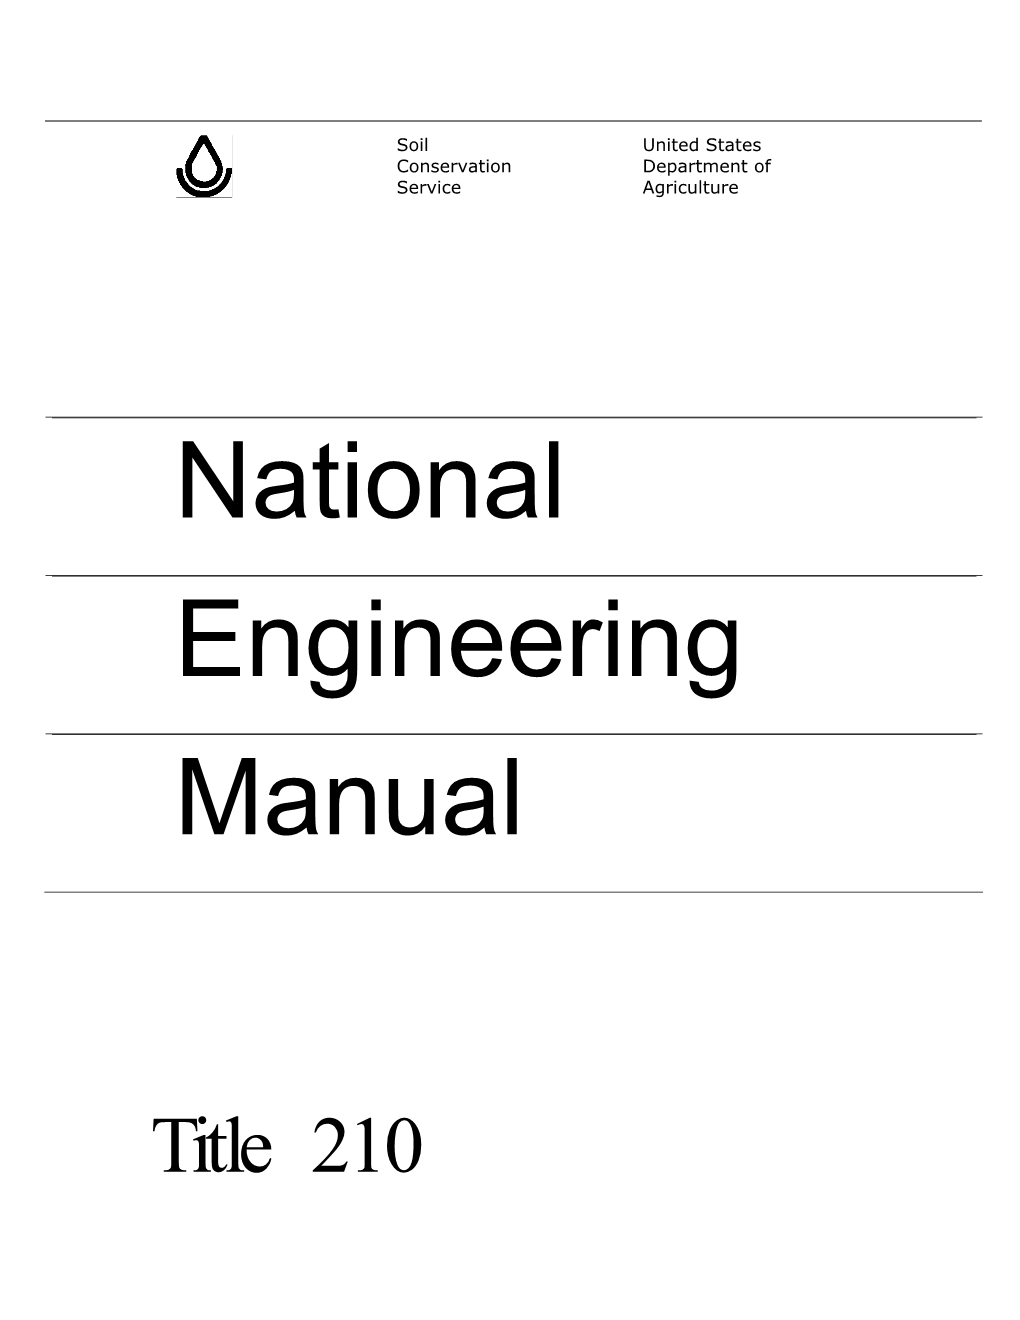 National Engineering Manual